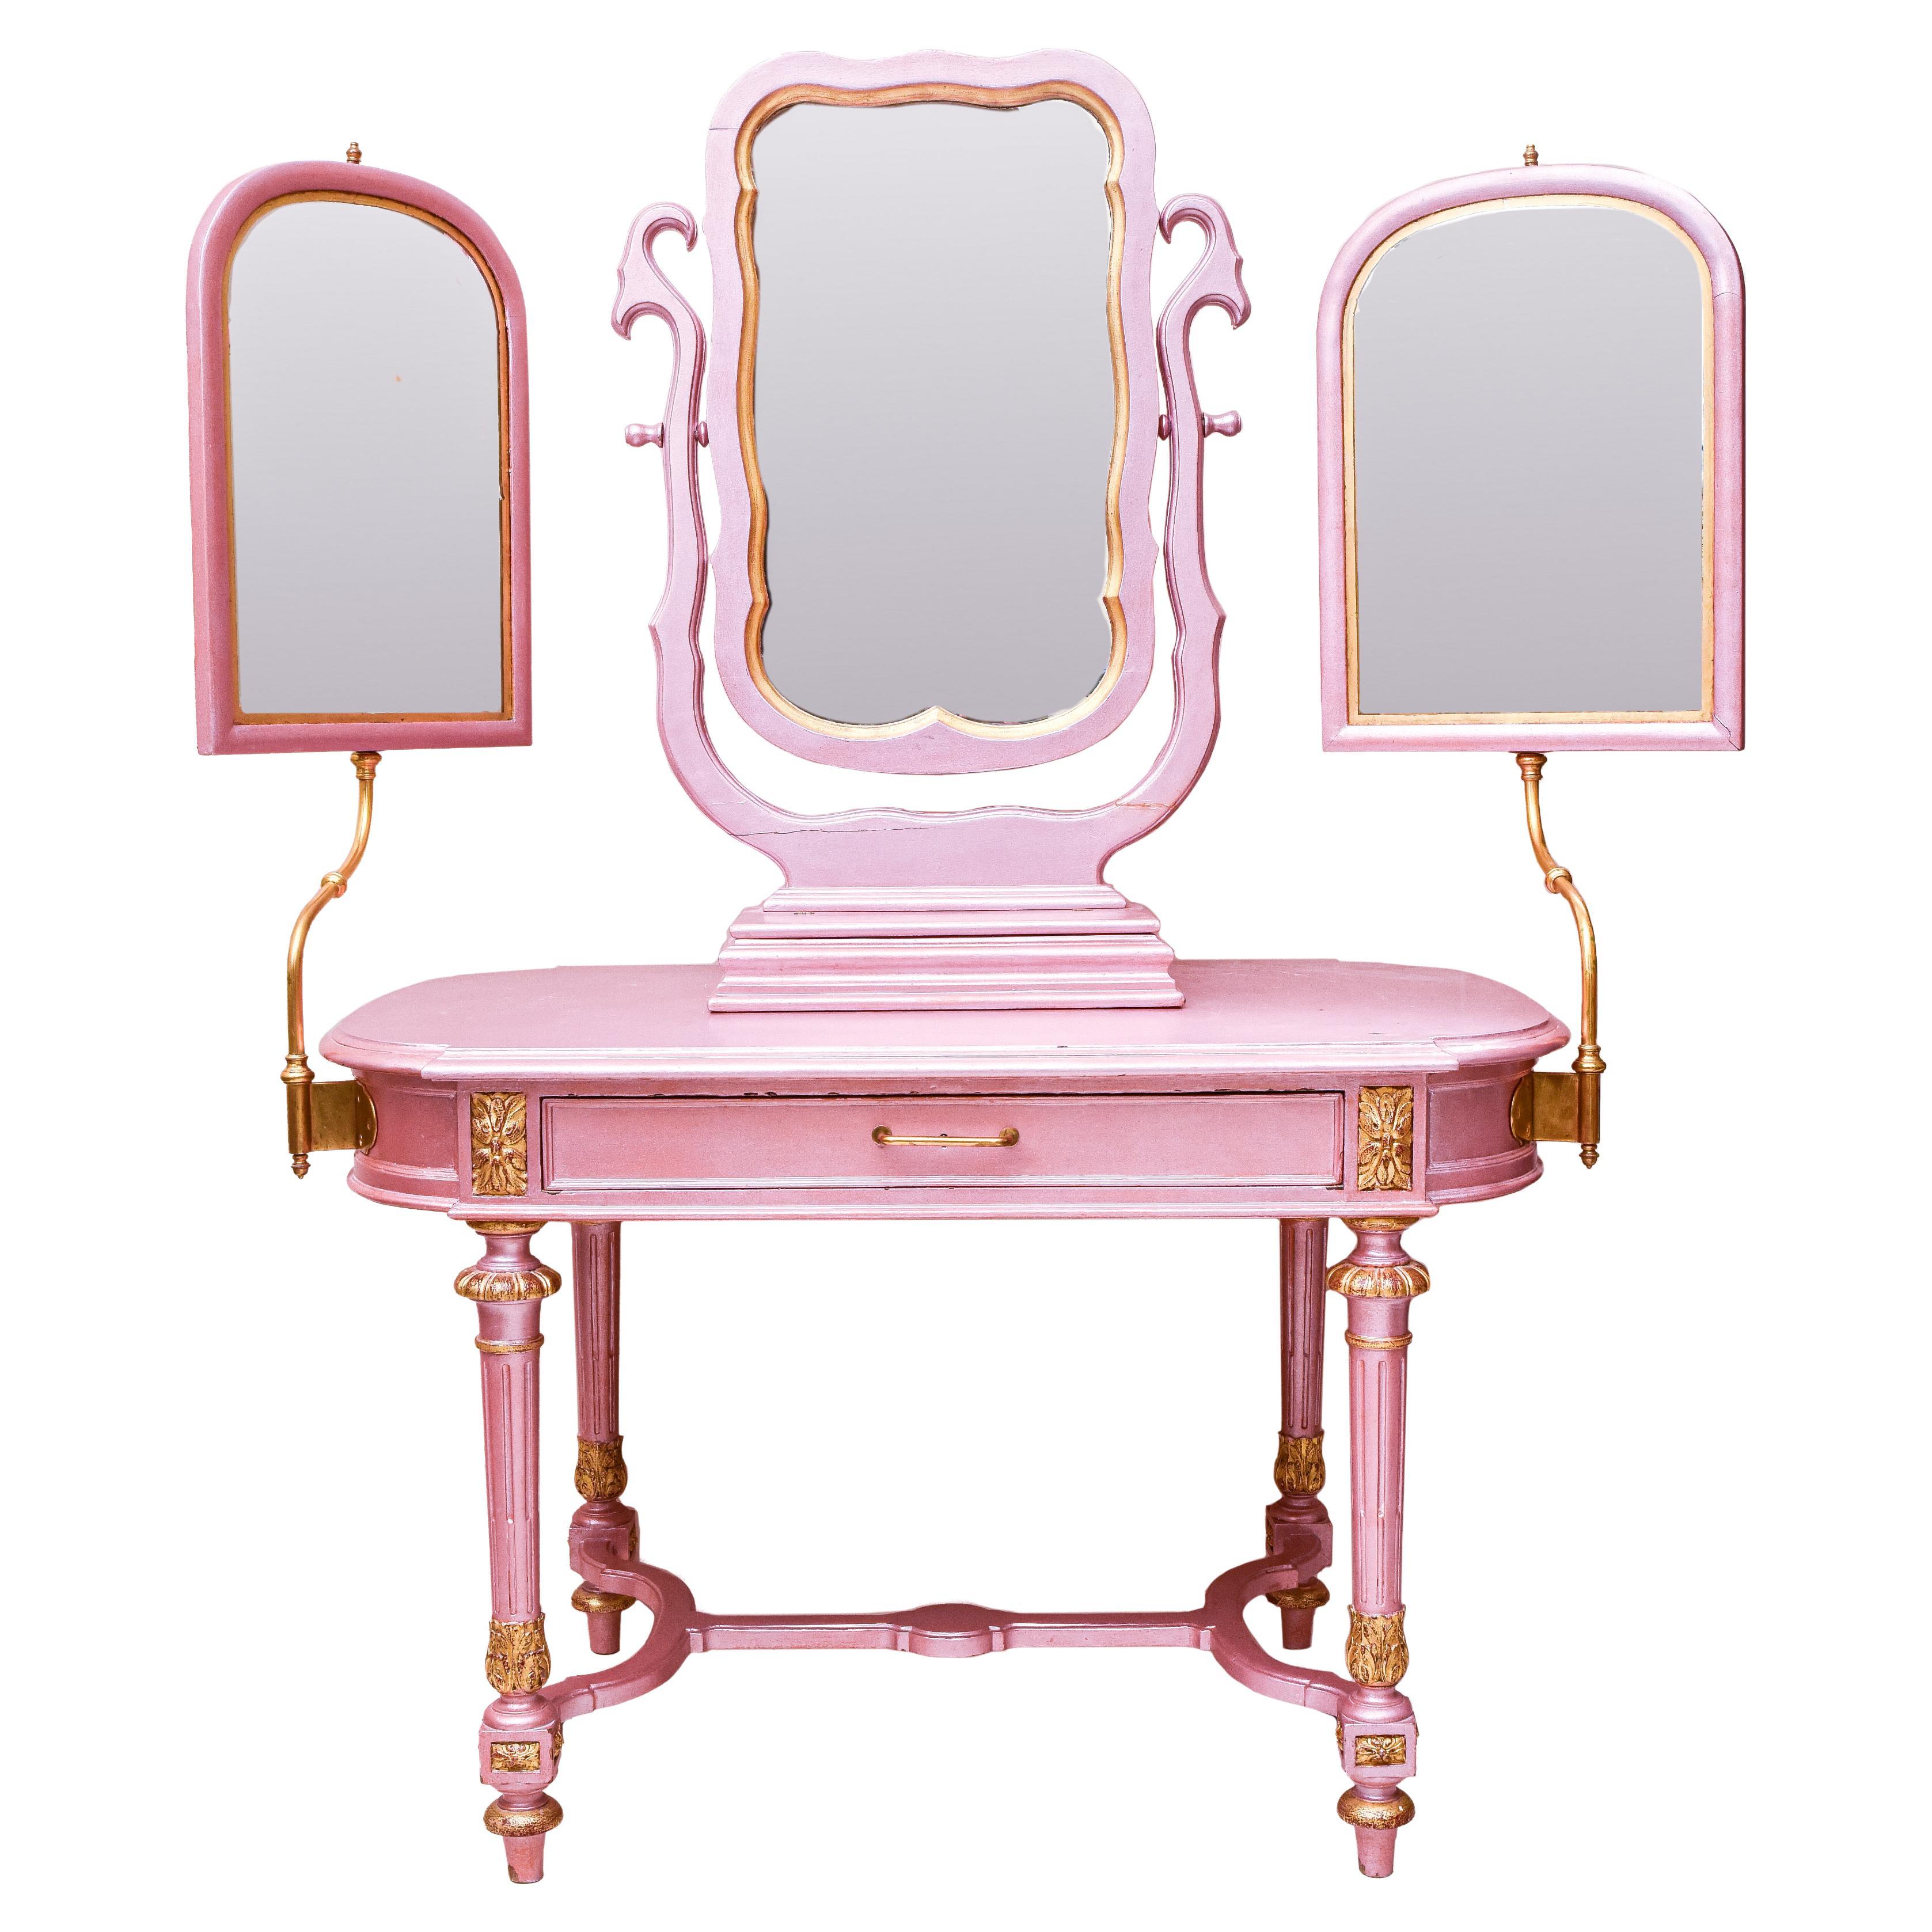 Victorian Revival Pink Vanity Table